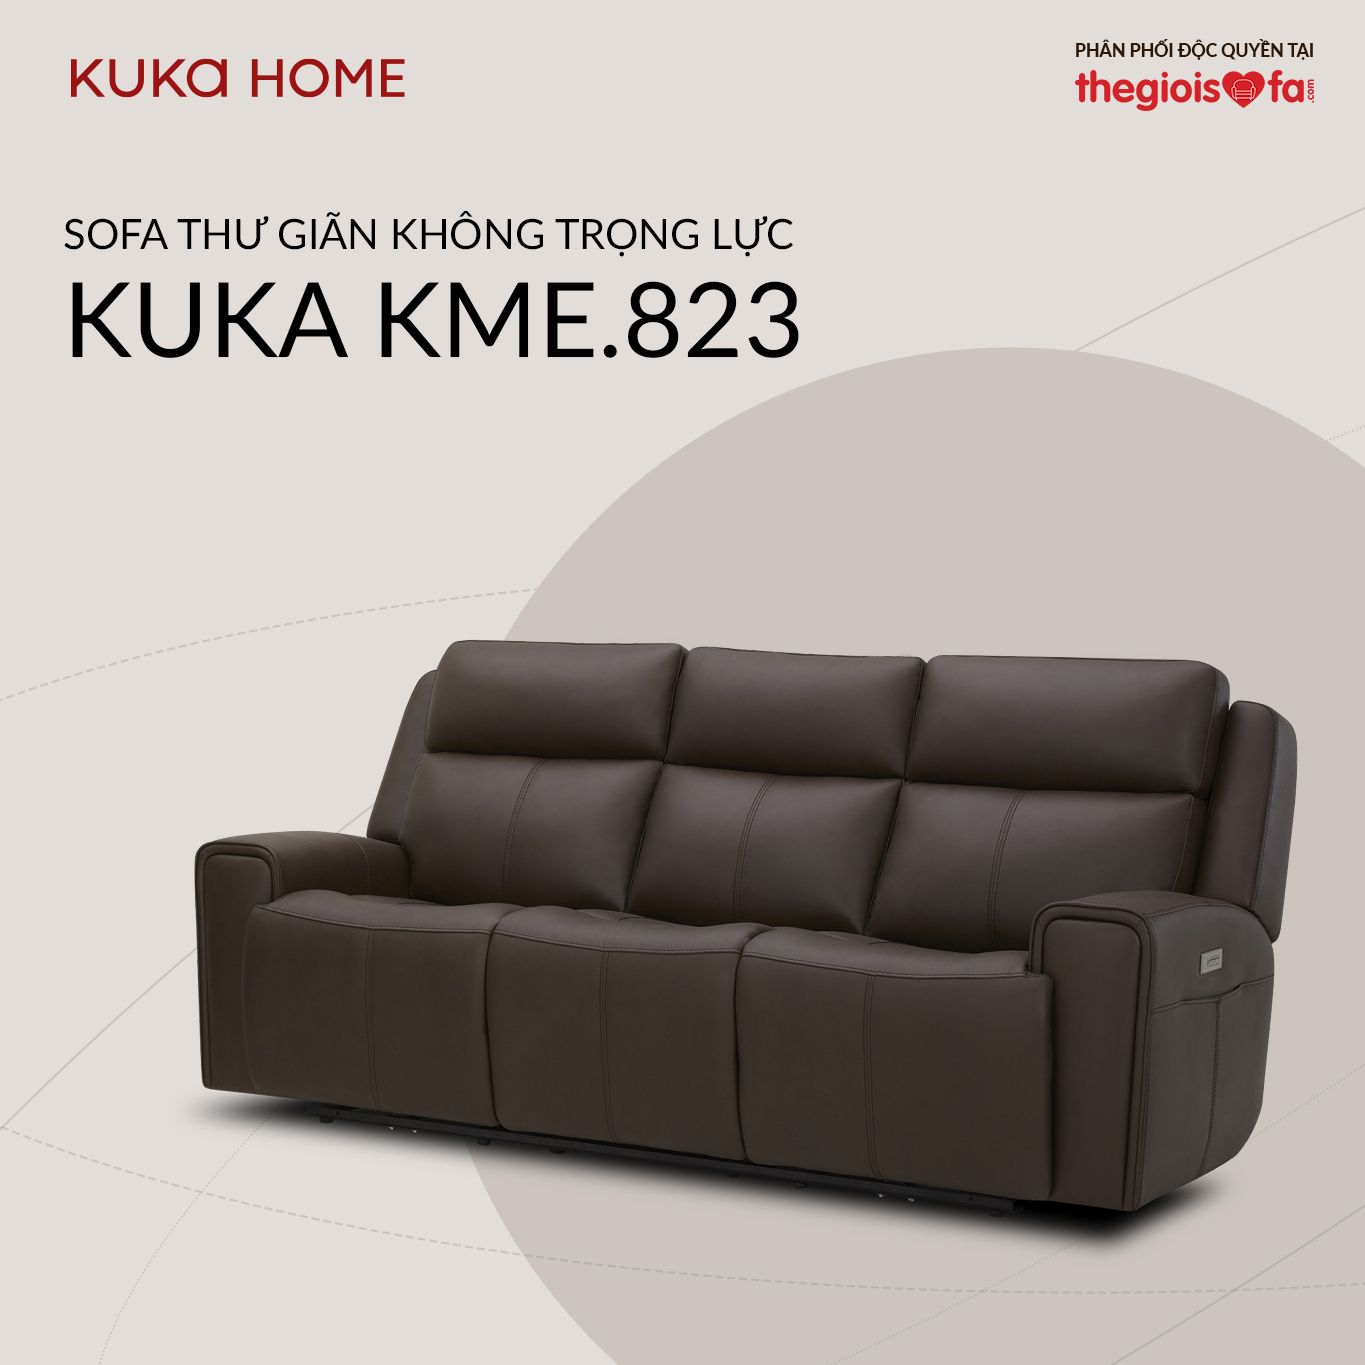 Sofa văng da điện Kuka KME.823